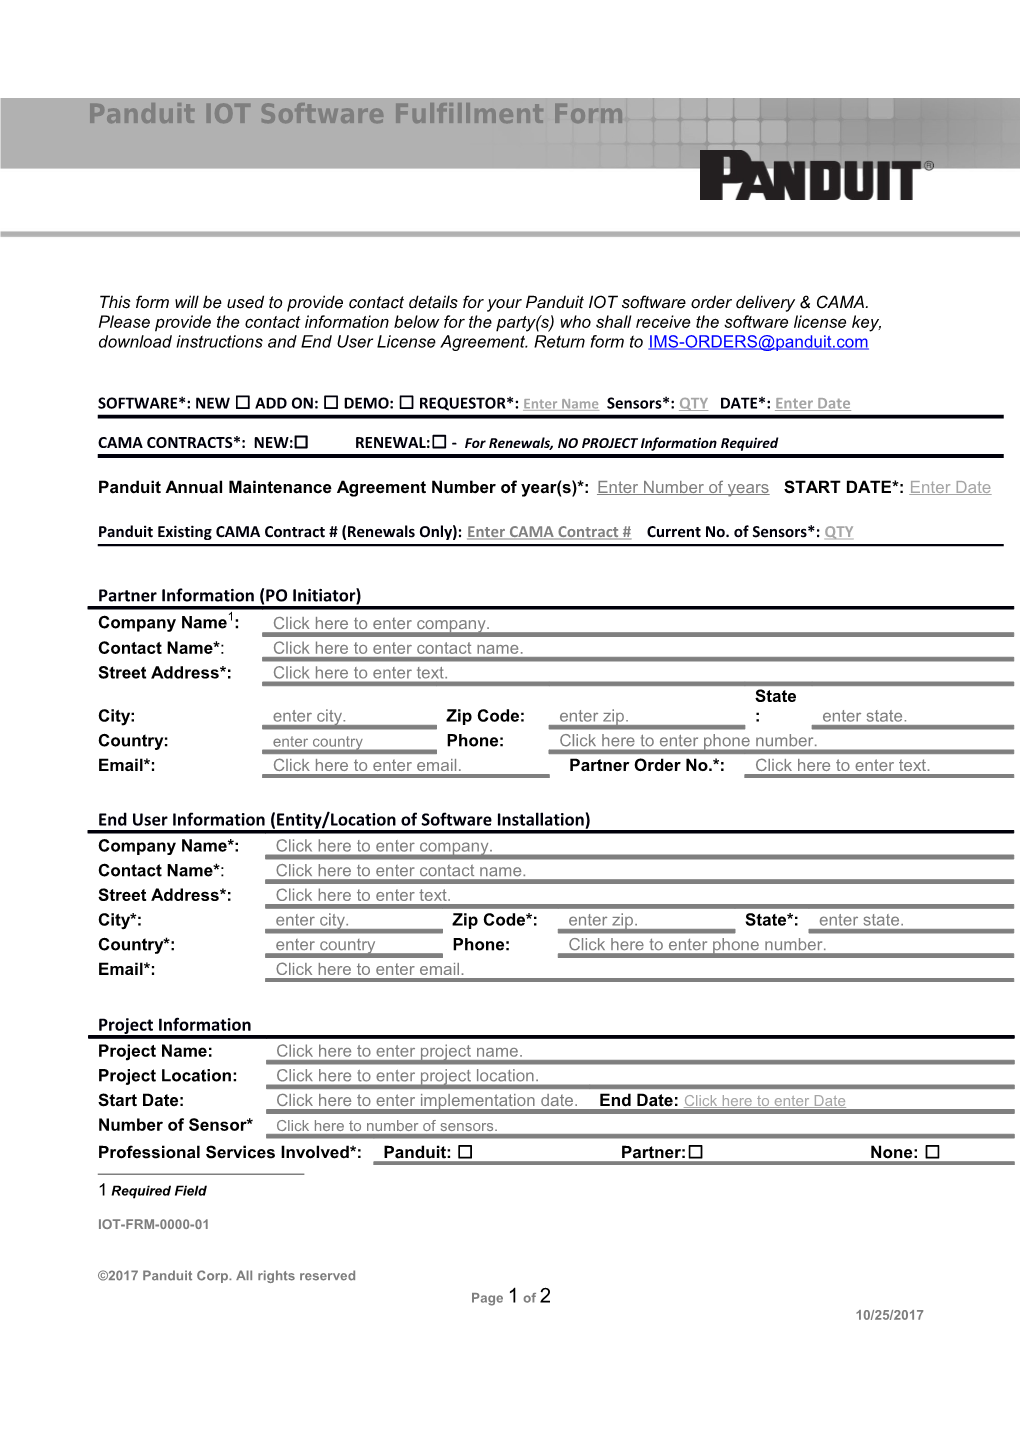 Smartzone Software License & CAMA Form (IMS-FRM-0100-03)